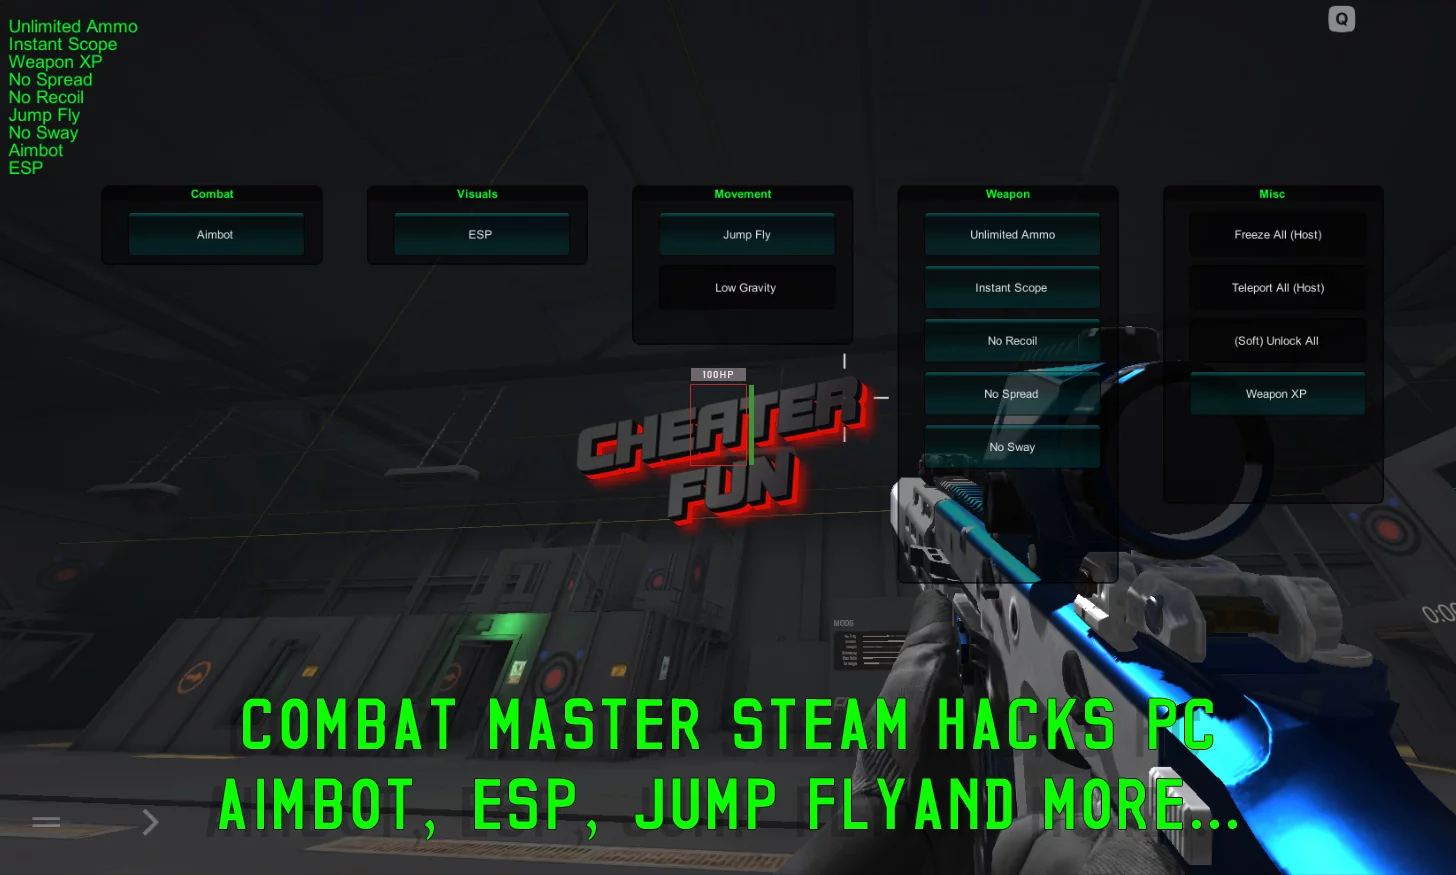 Combat Master Steam Hacks PC: Aimbot, ESP, Jump Fly